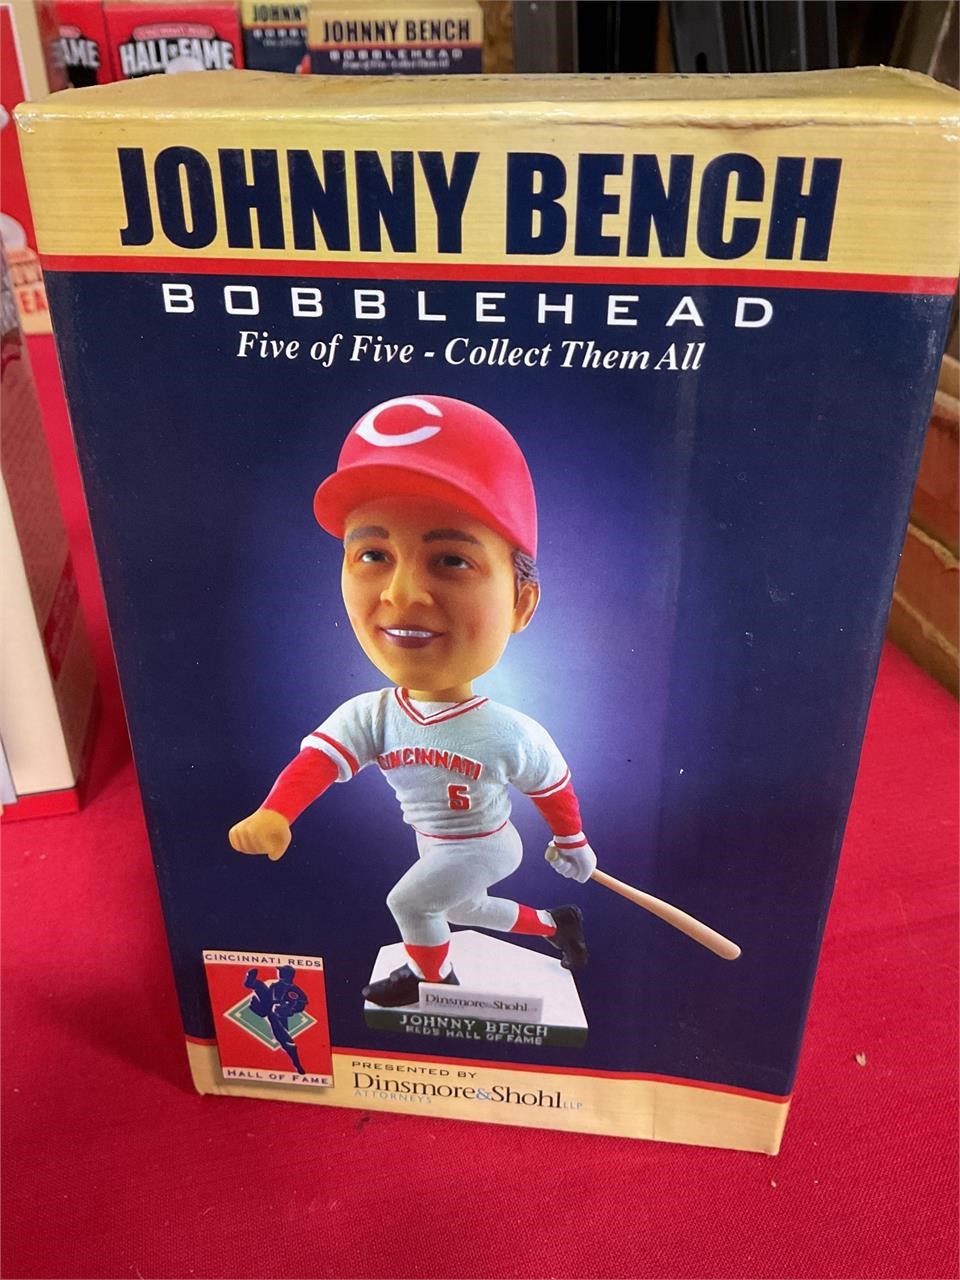 Cincinnati Reds, Johnny Bench bobble head